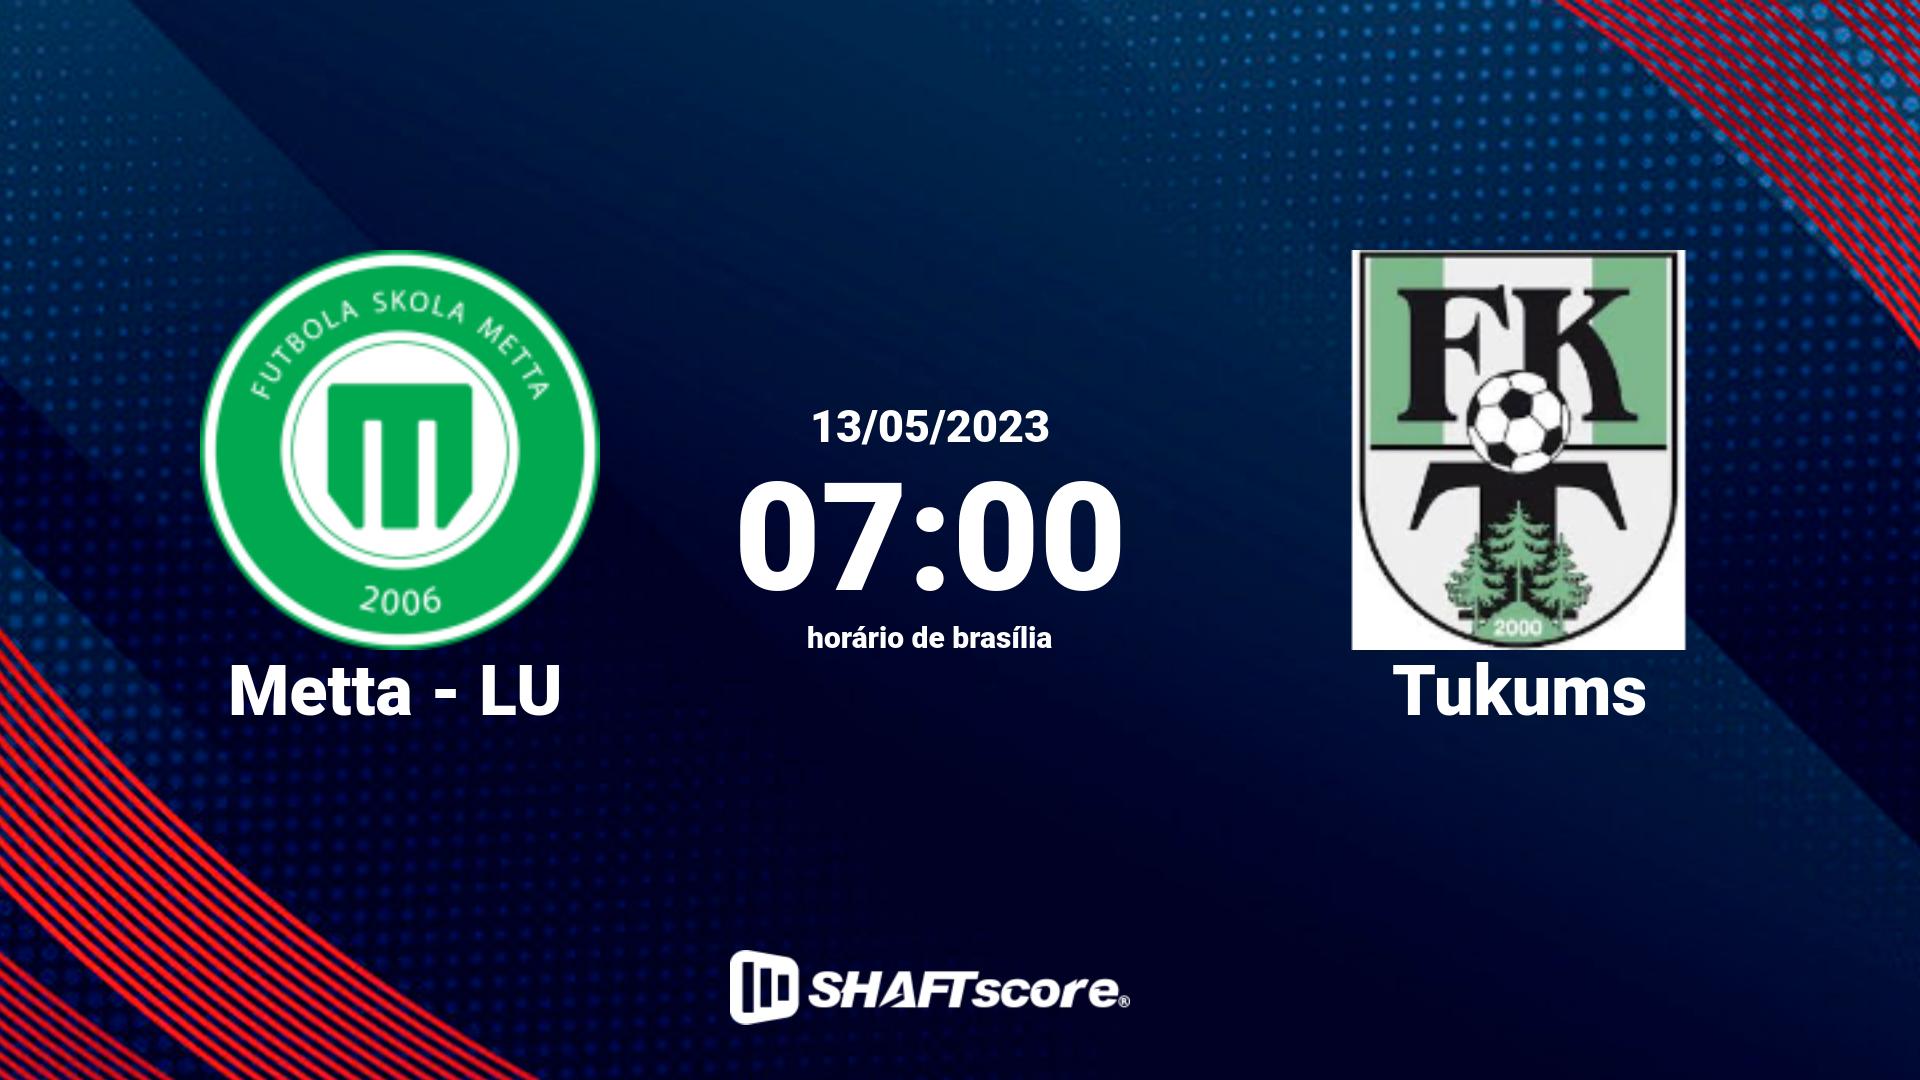 Estatísticas do jogo Metta - LU vs Tukums 13.05 07:00